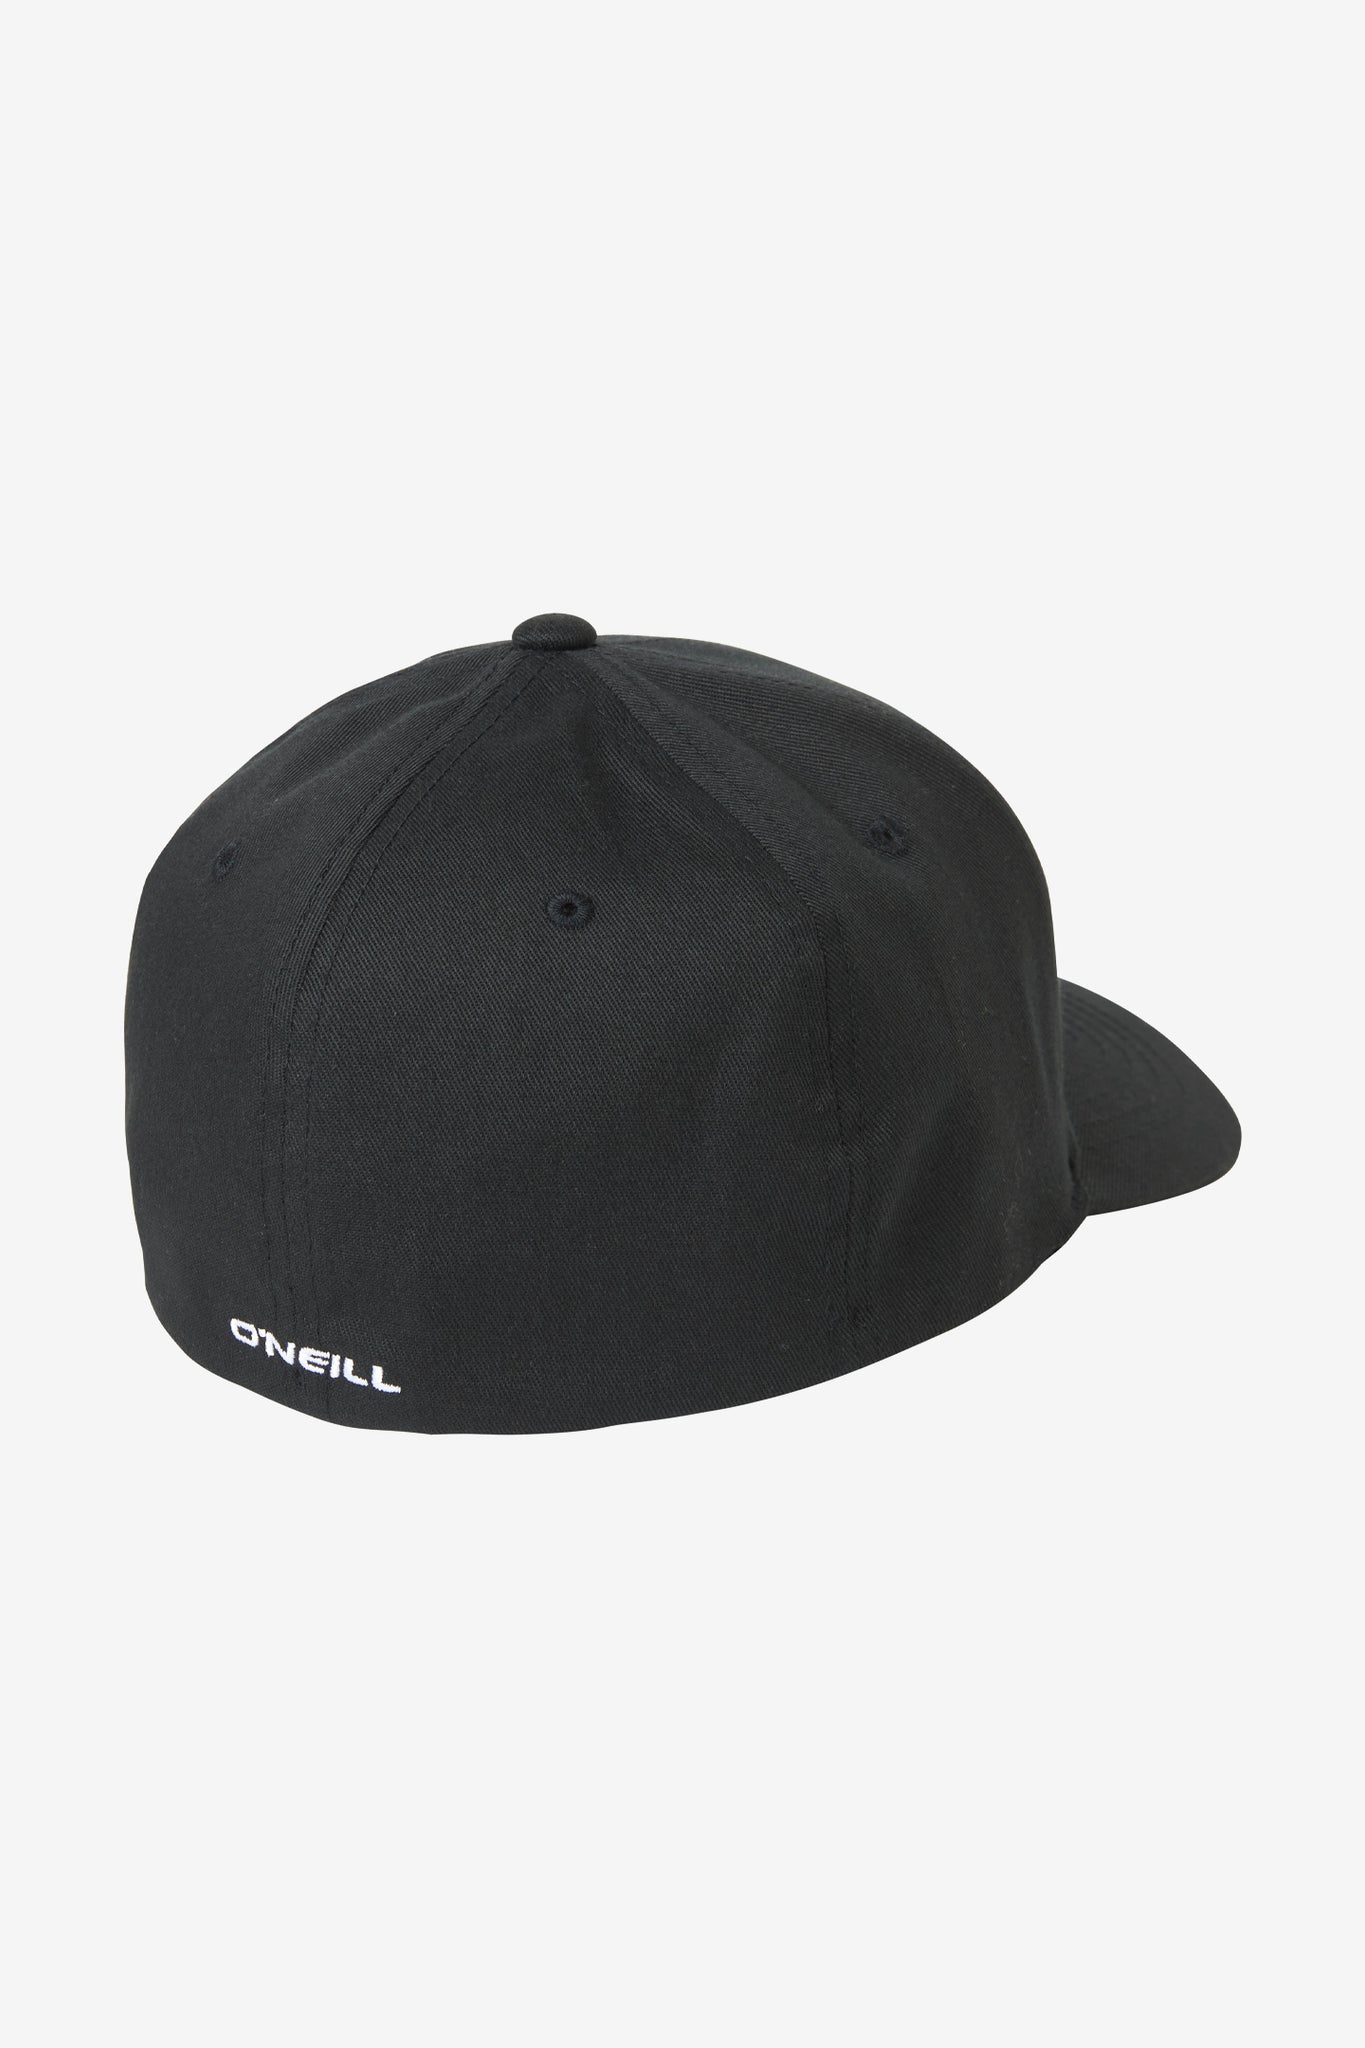 All Good Black - O\'Neill | Hat Hat